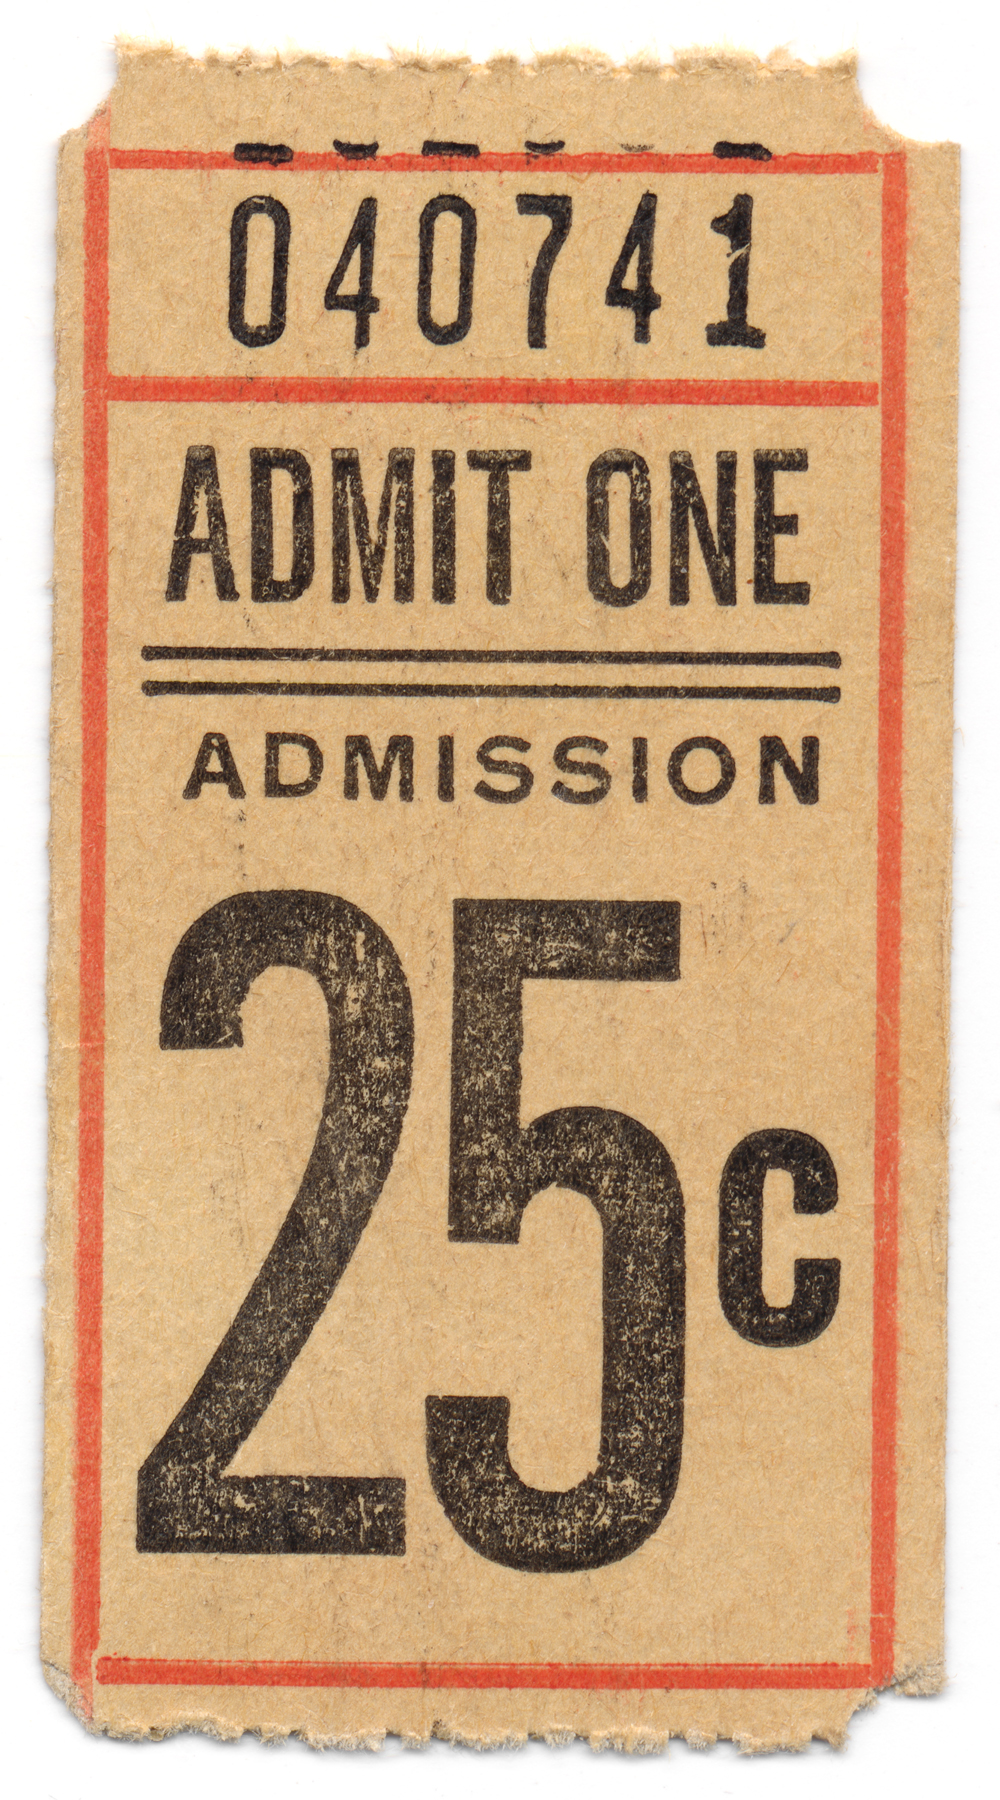 Vintage admission ticket - front side photo